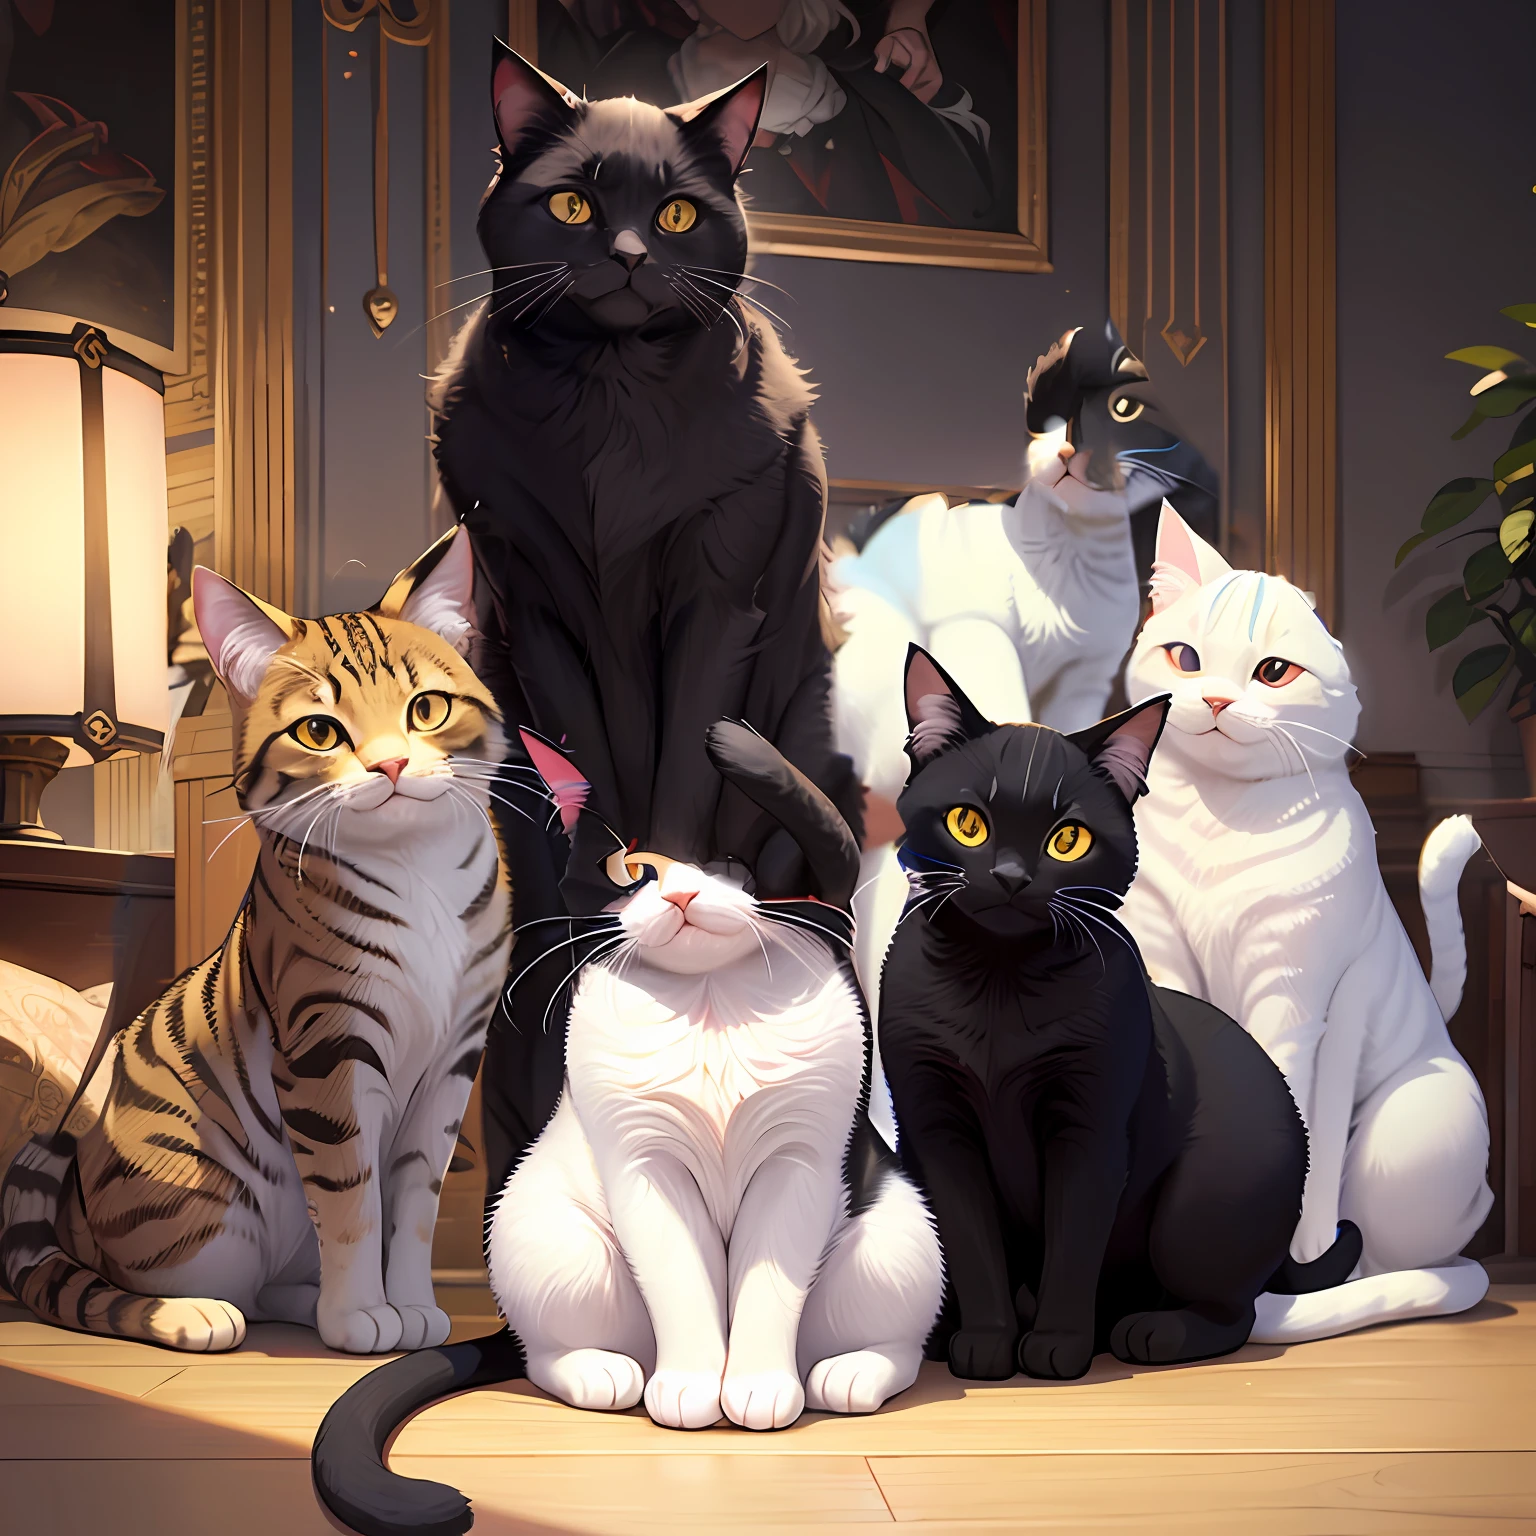 （com.catss），القطط فقط，مجموعة واسعة من القطط